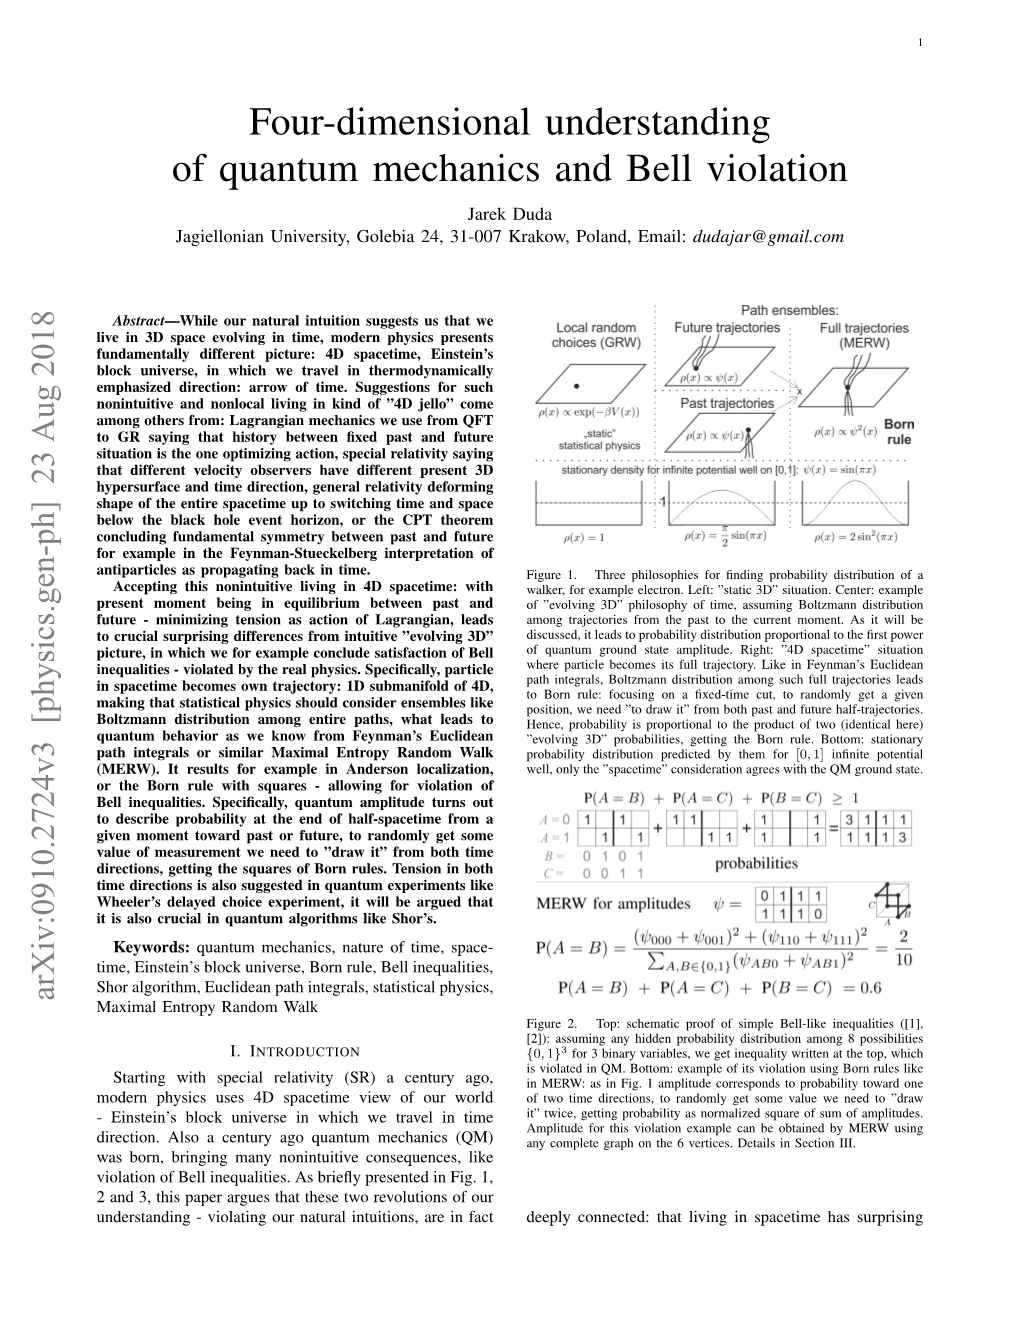 Four-Dimensional Understanding of Quantum Mechanics and Bell Violation Jarek Duda Jagiellonian University, Golebia 24, 31-007 Krakow, Poland, Email: Dudajar@Gmail.Com